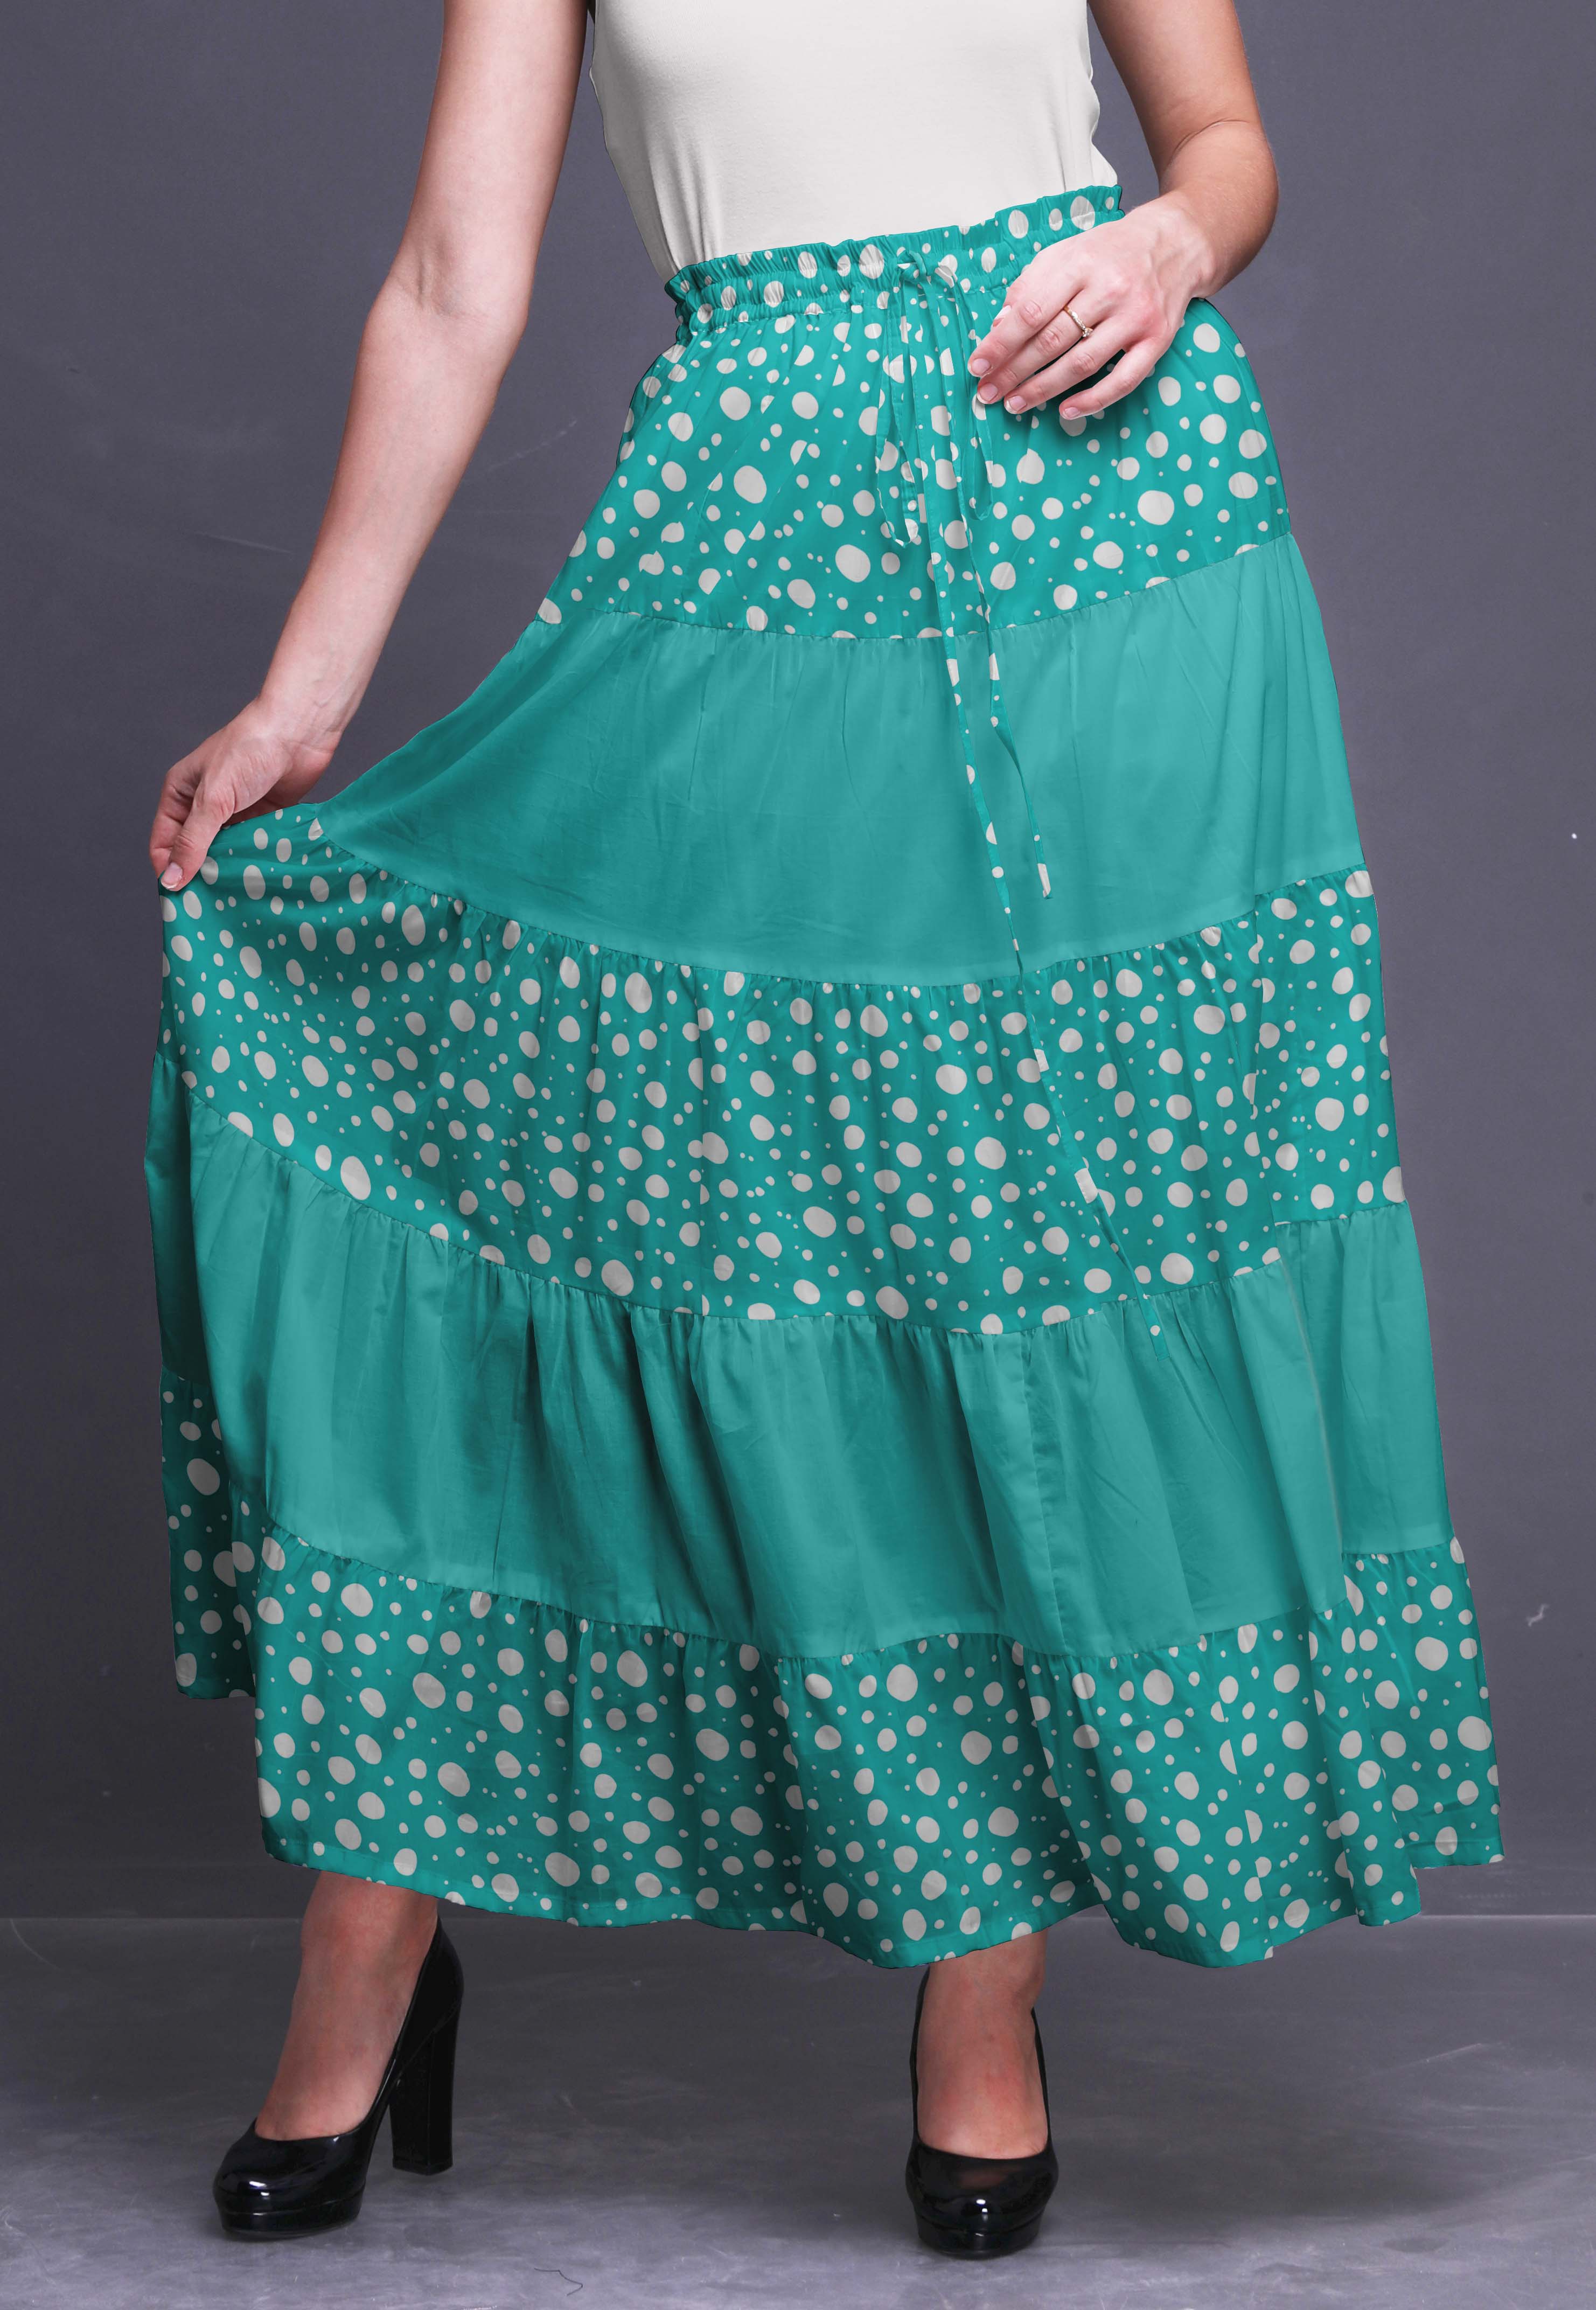 Bimba 5 Tier Cotton Skirts For Women Long Length Cotton Printed Skirt Fl 1092a Ebay